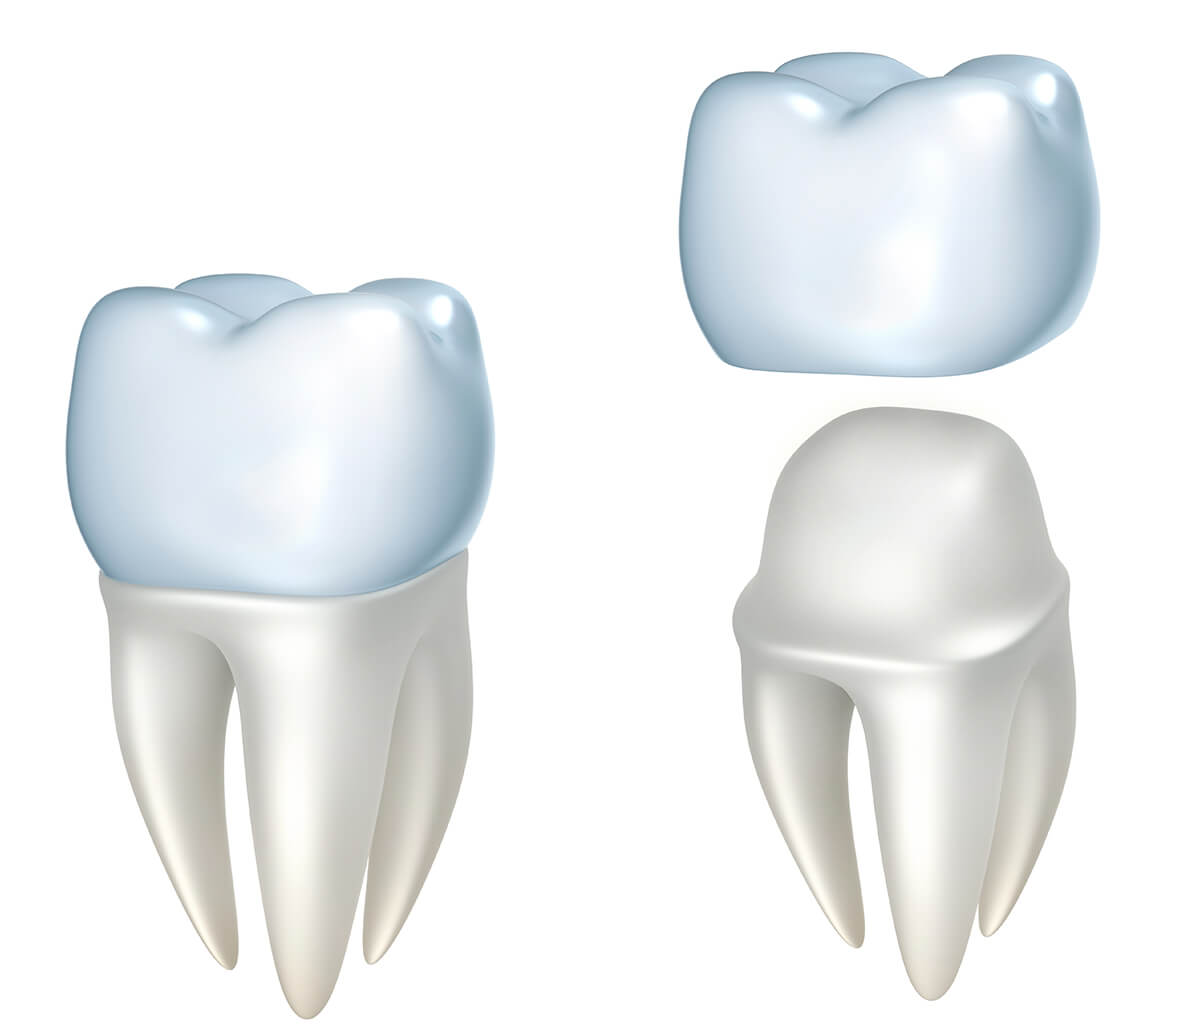 Dental Crown Replacement in Longview TX Area